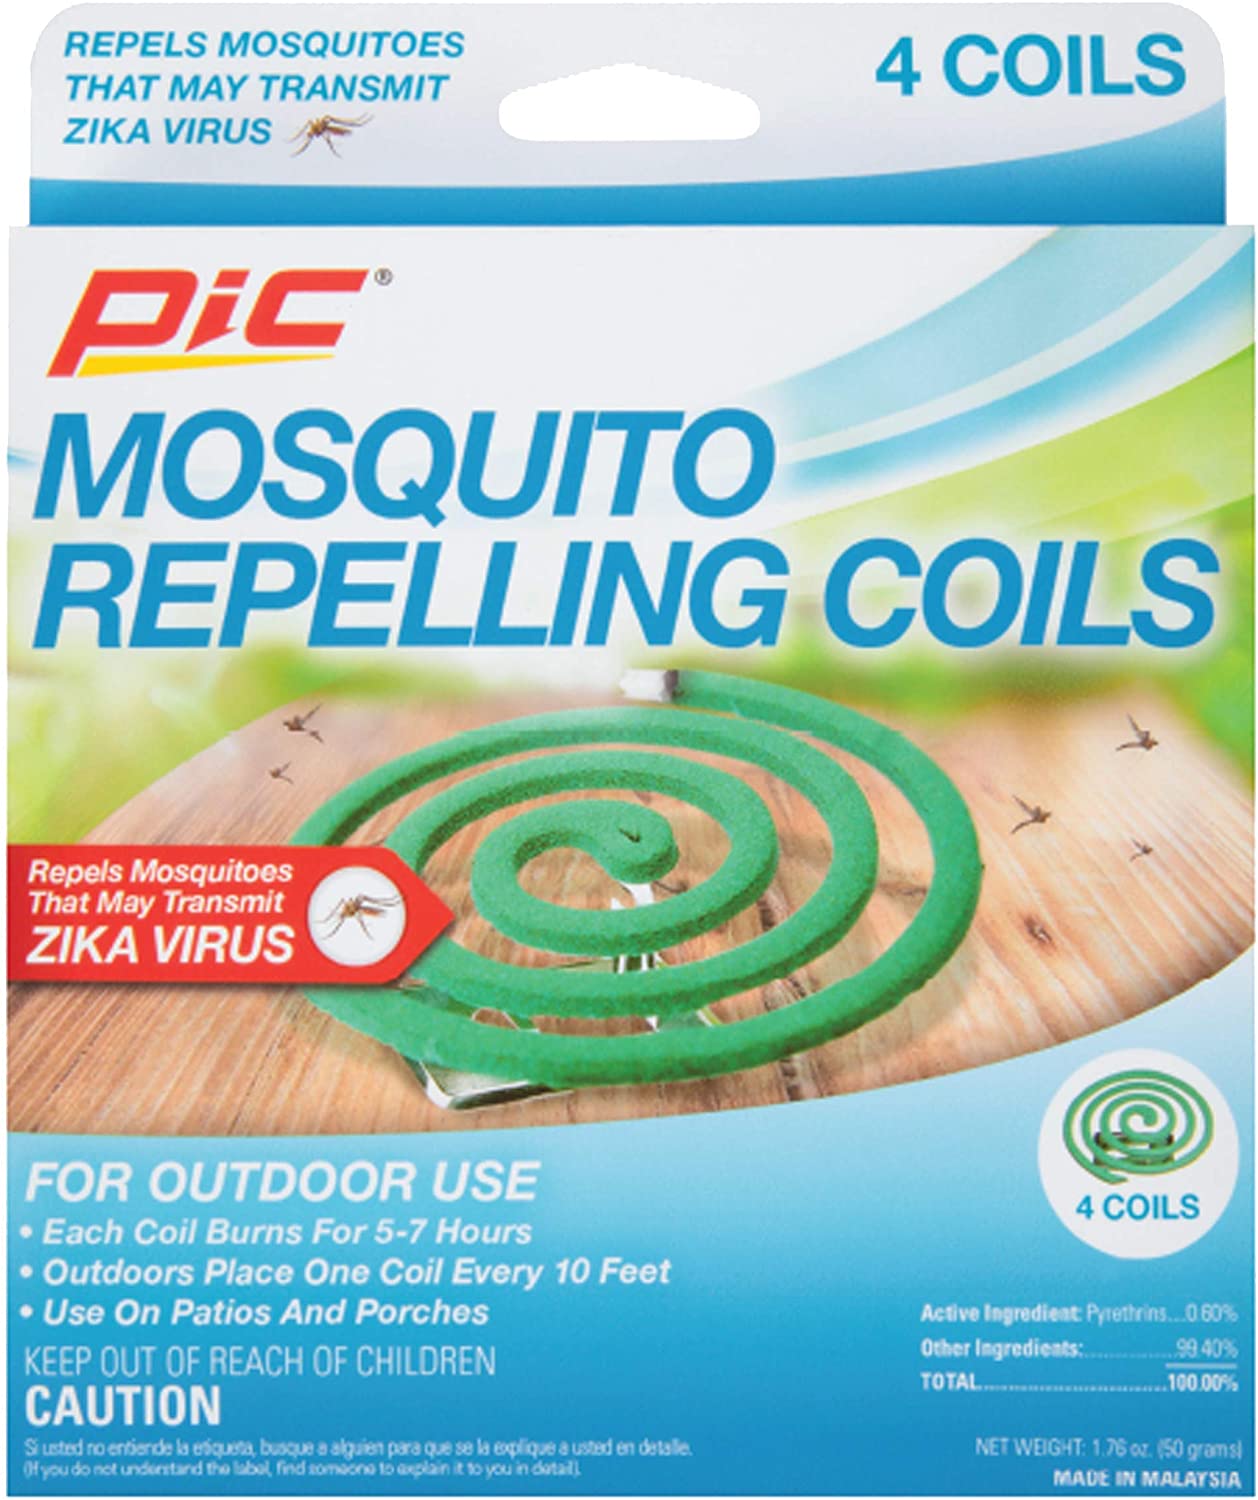 Pic mosquito repellant coils